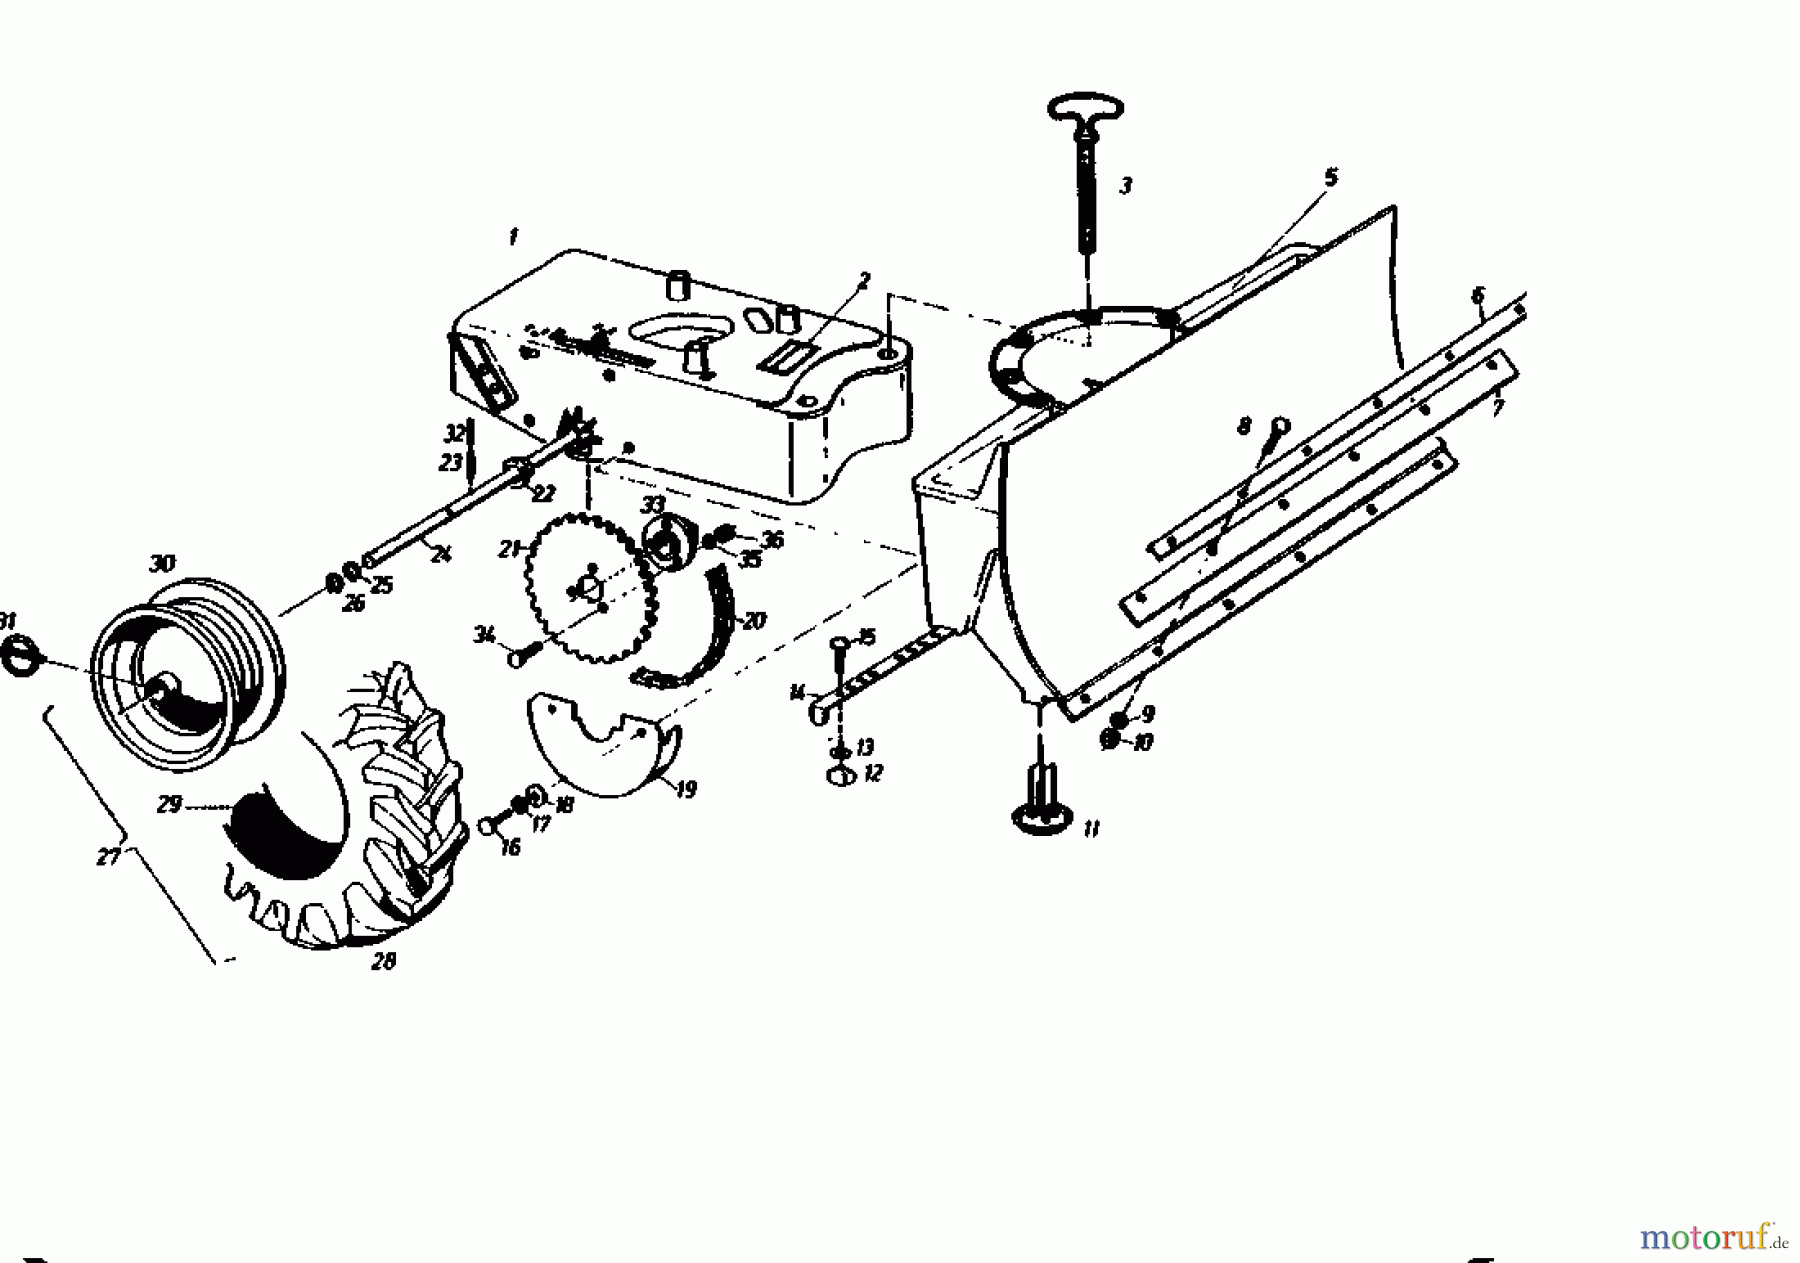  Gutbrod Snow plough SR 800 E 02888.06  (1990) Basic machine